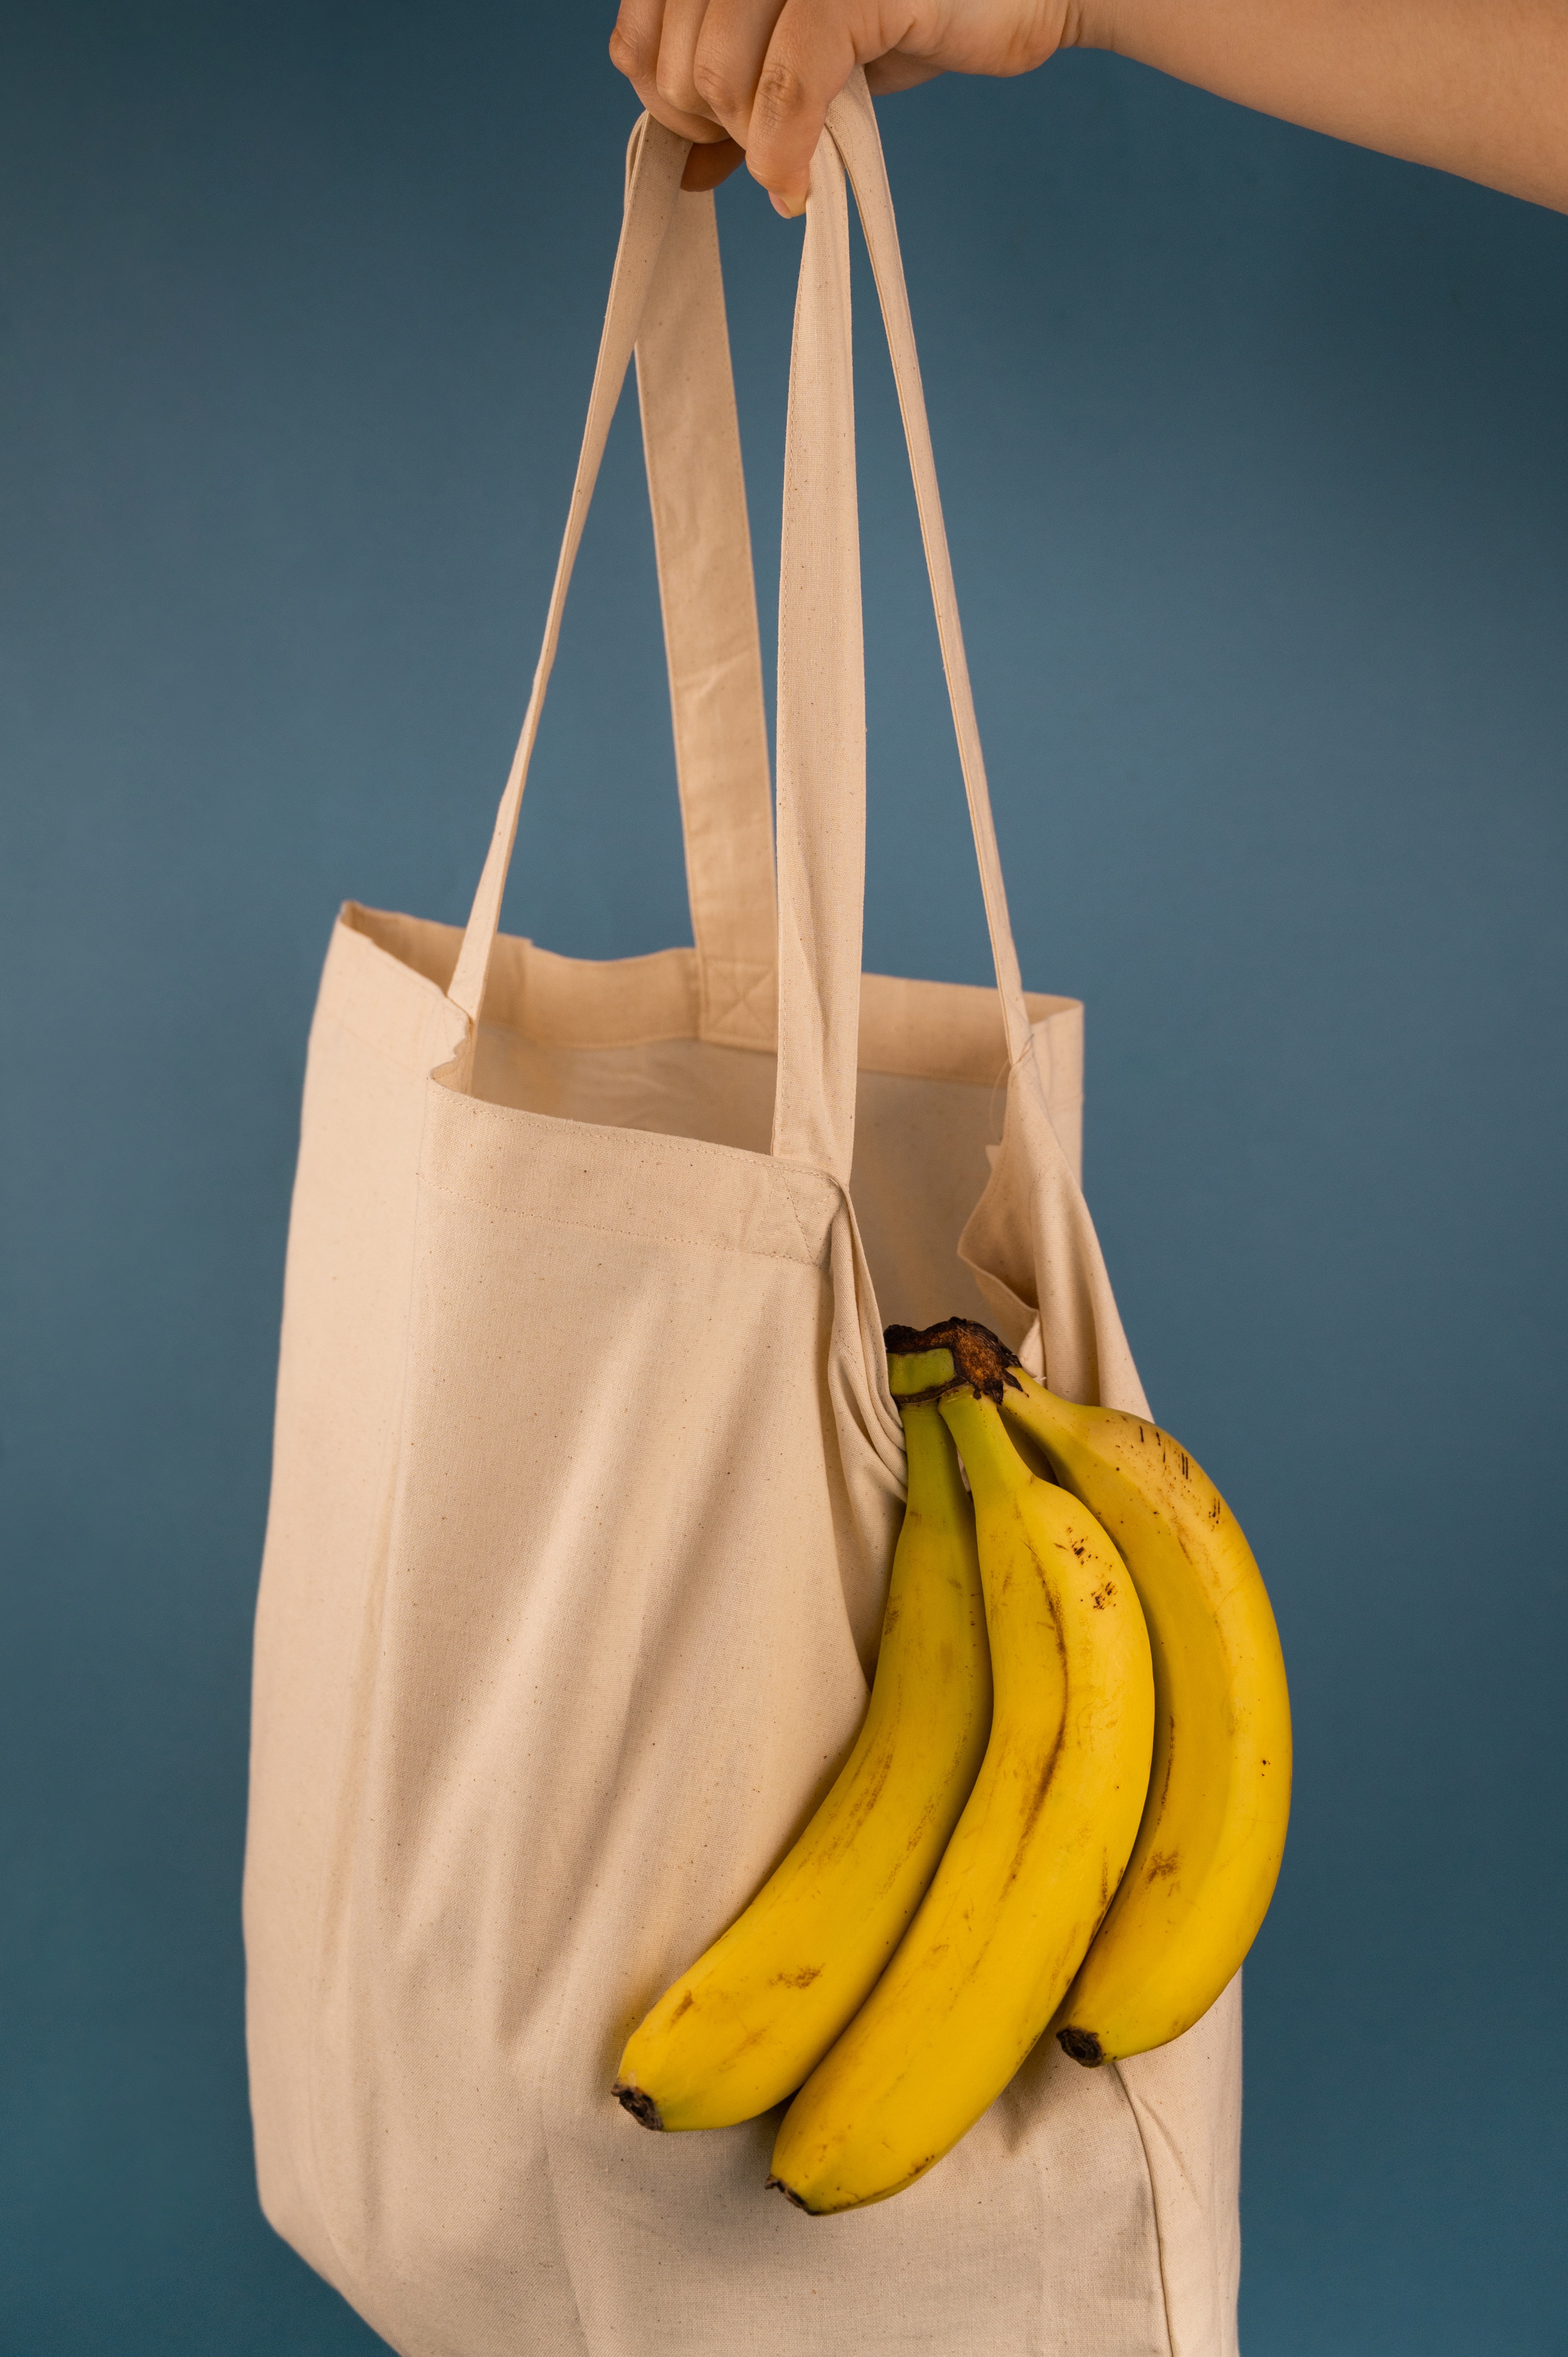 person holding reusable cloth bag with bananas